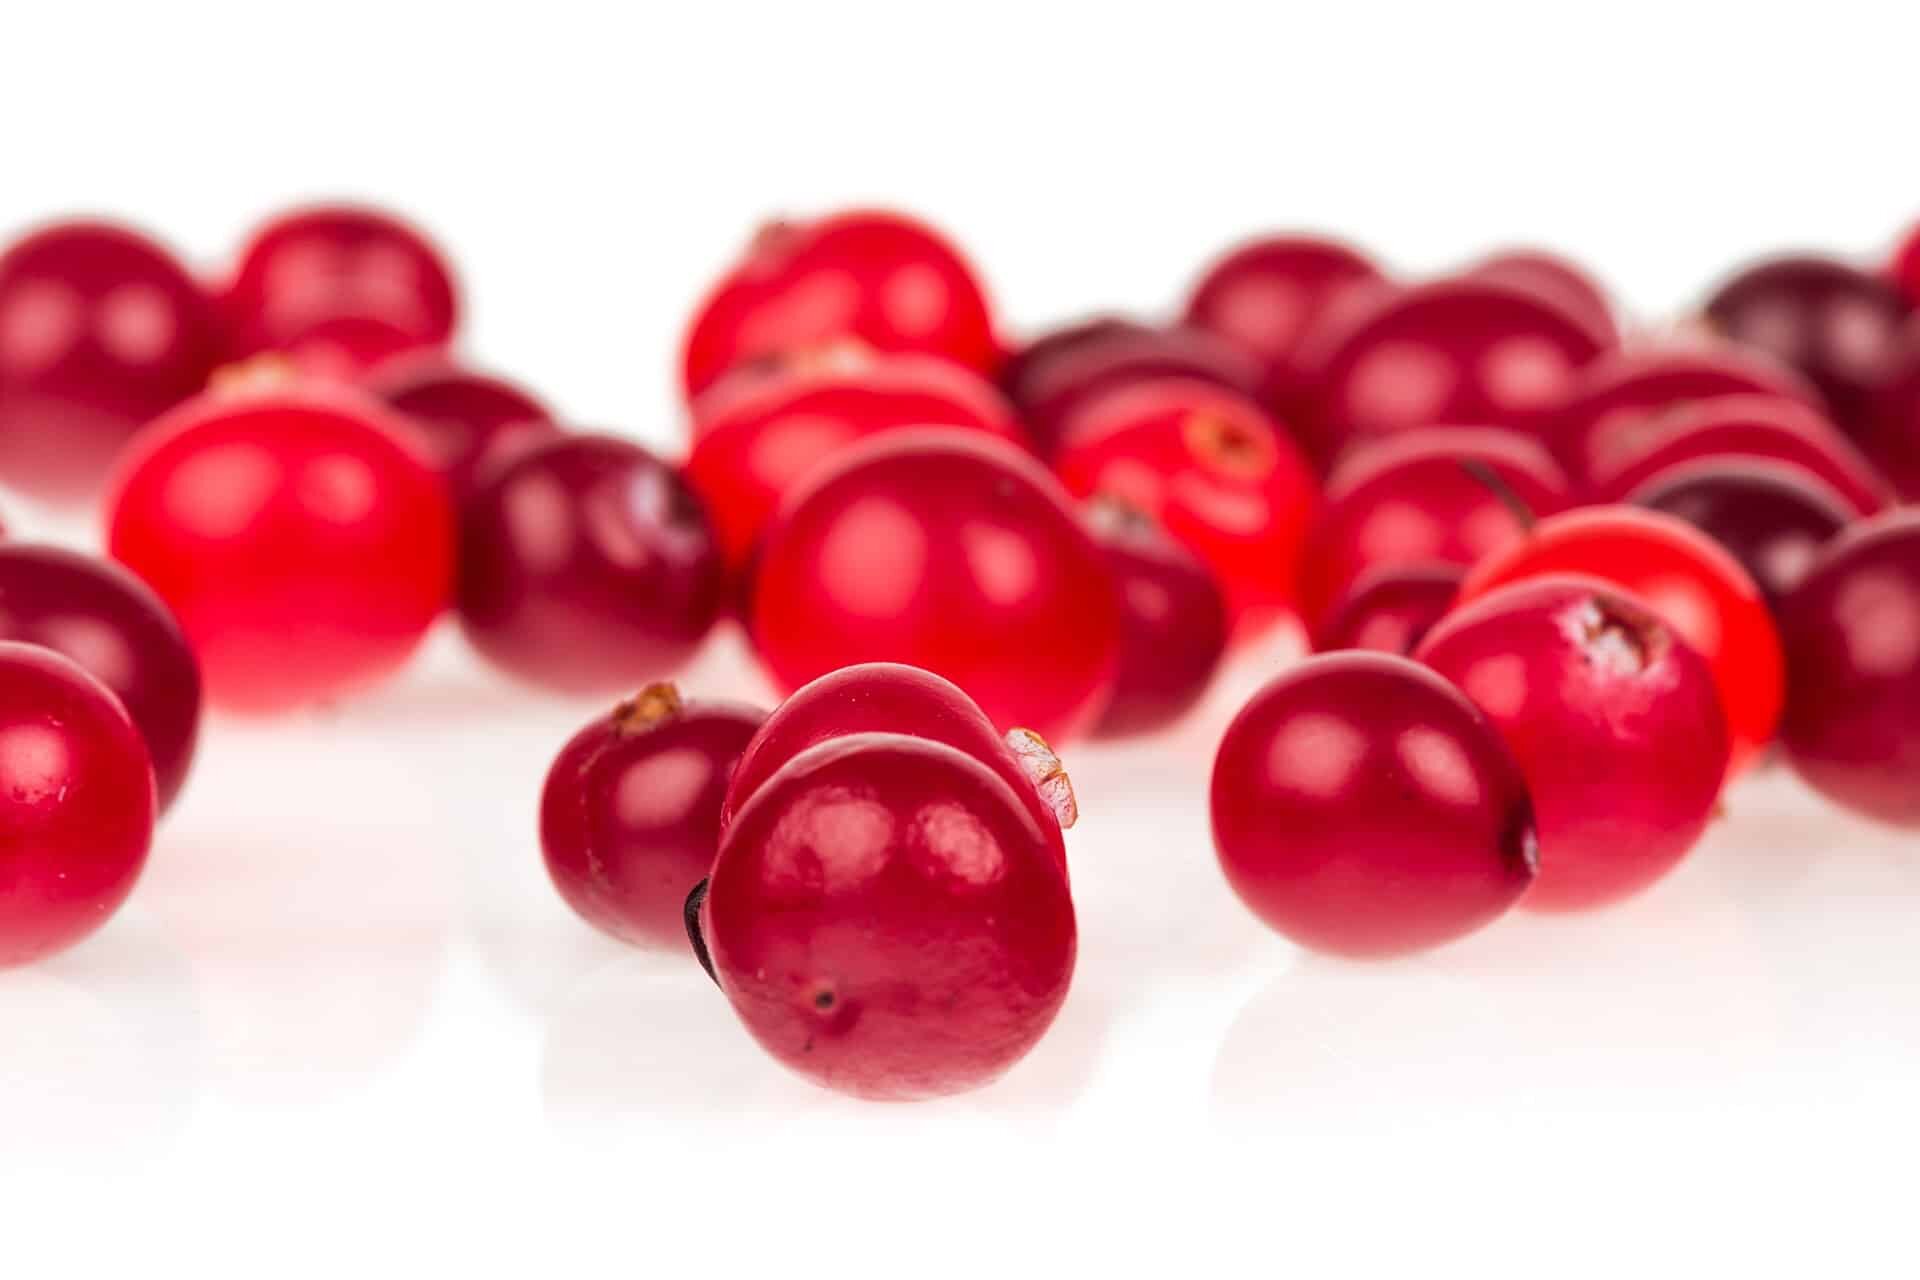 Cranberry fruits